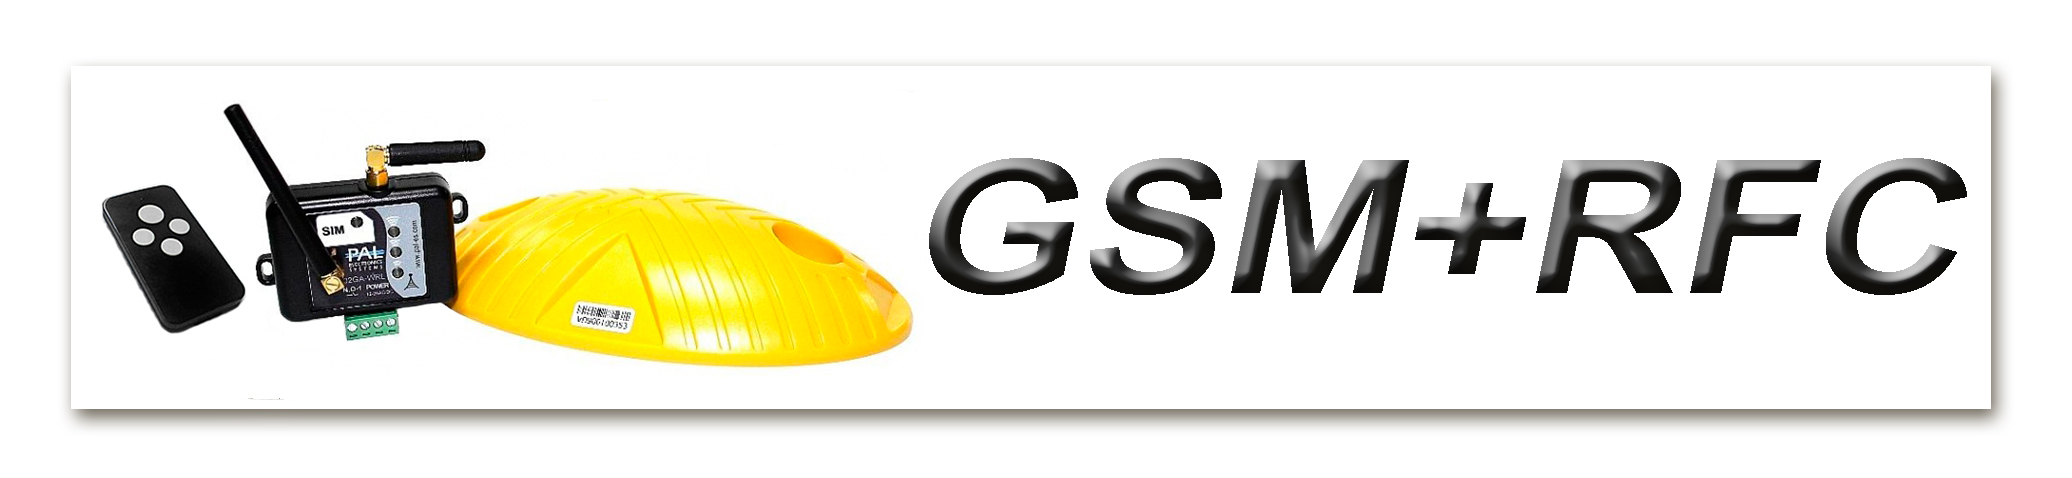 GSM контроллеры с анти-клон пультами